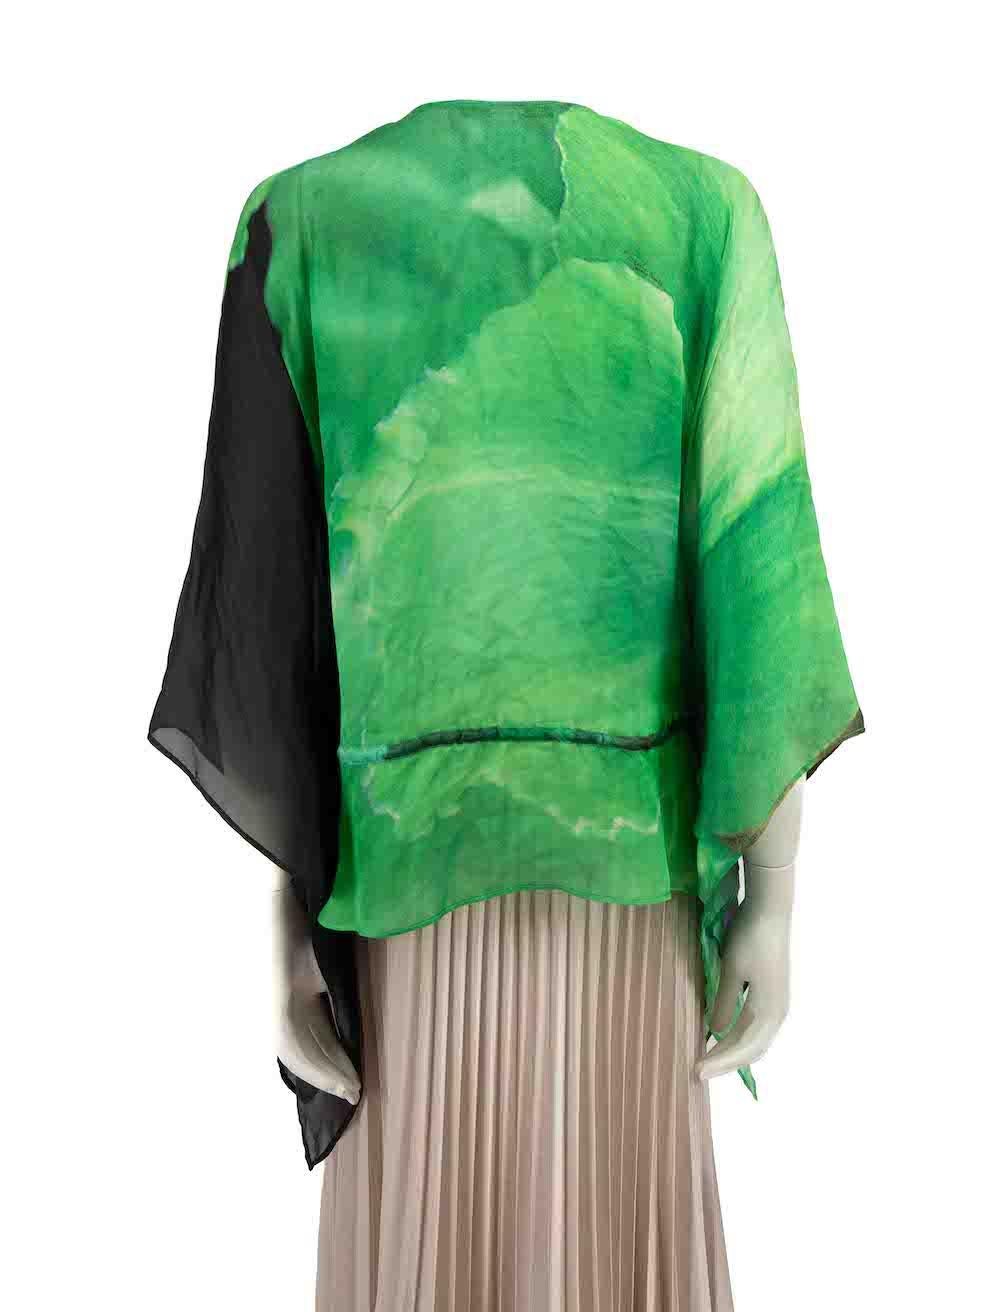 Roberto Cavalli Green Watercolour Print Drape Top Size M In Good Condition For Sale In London, GB